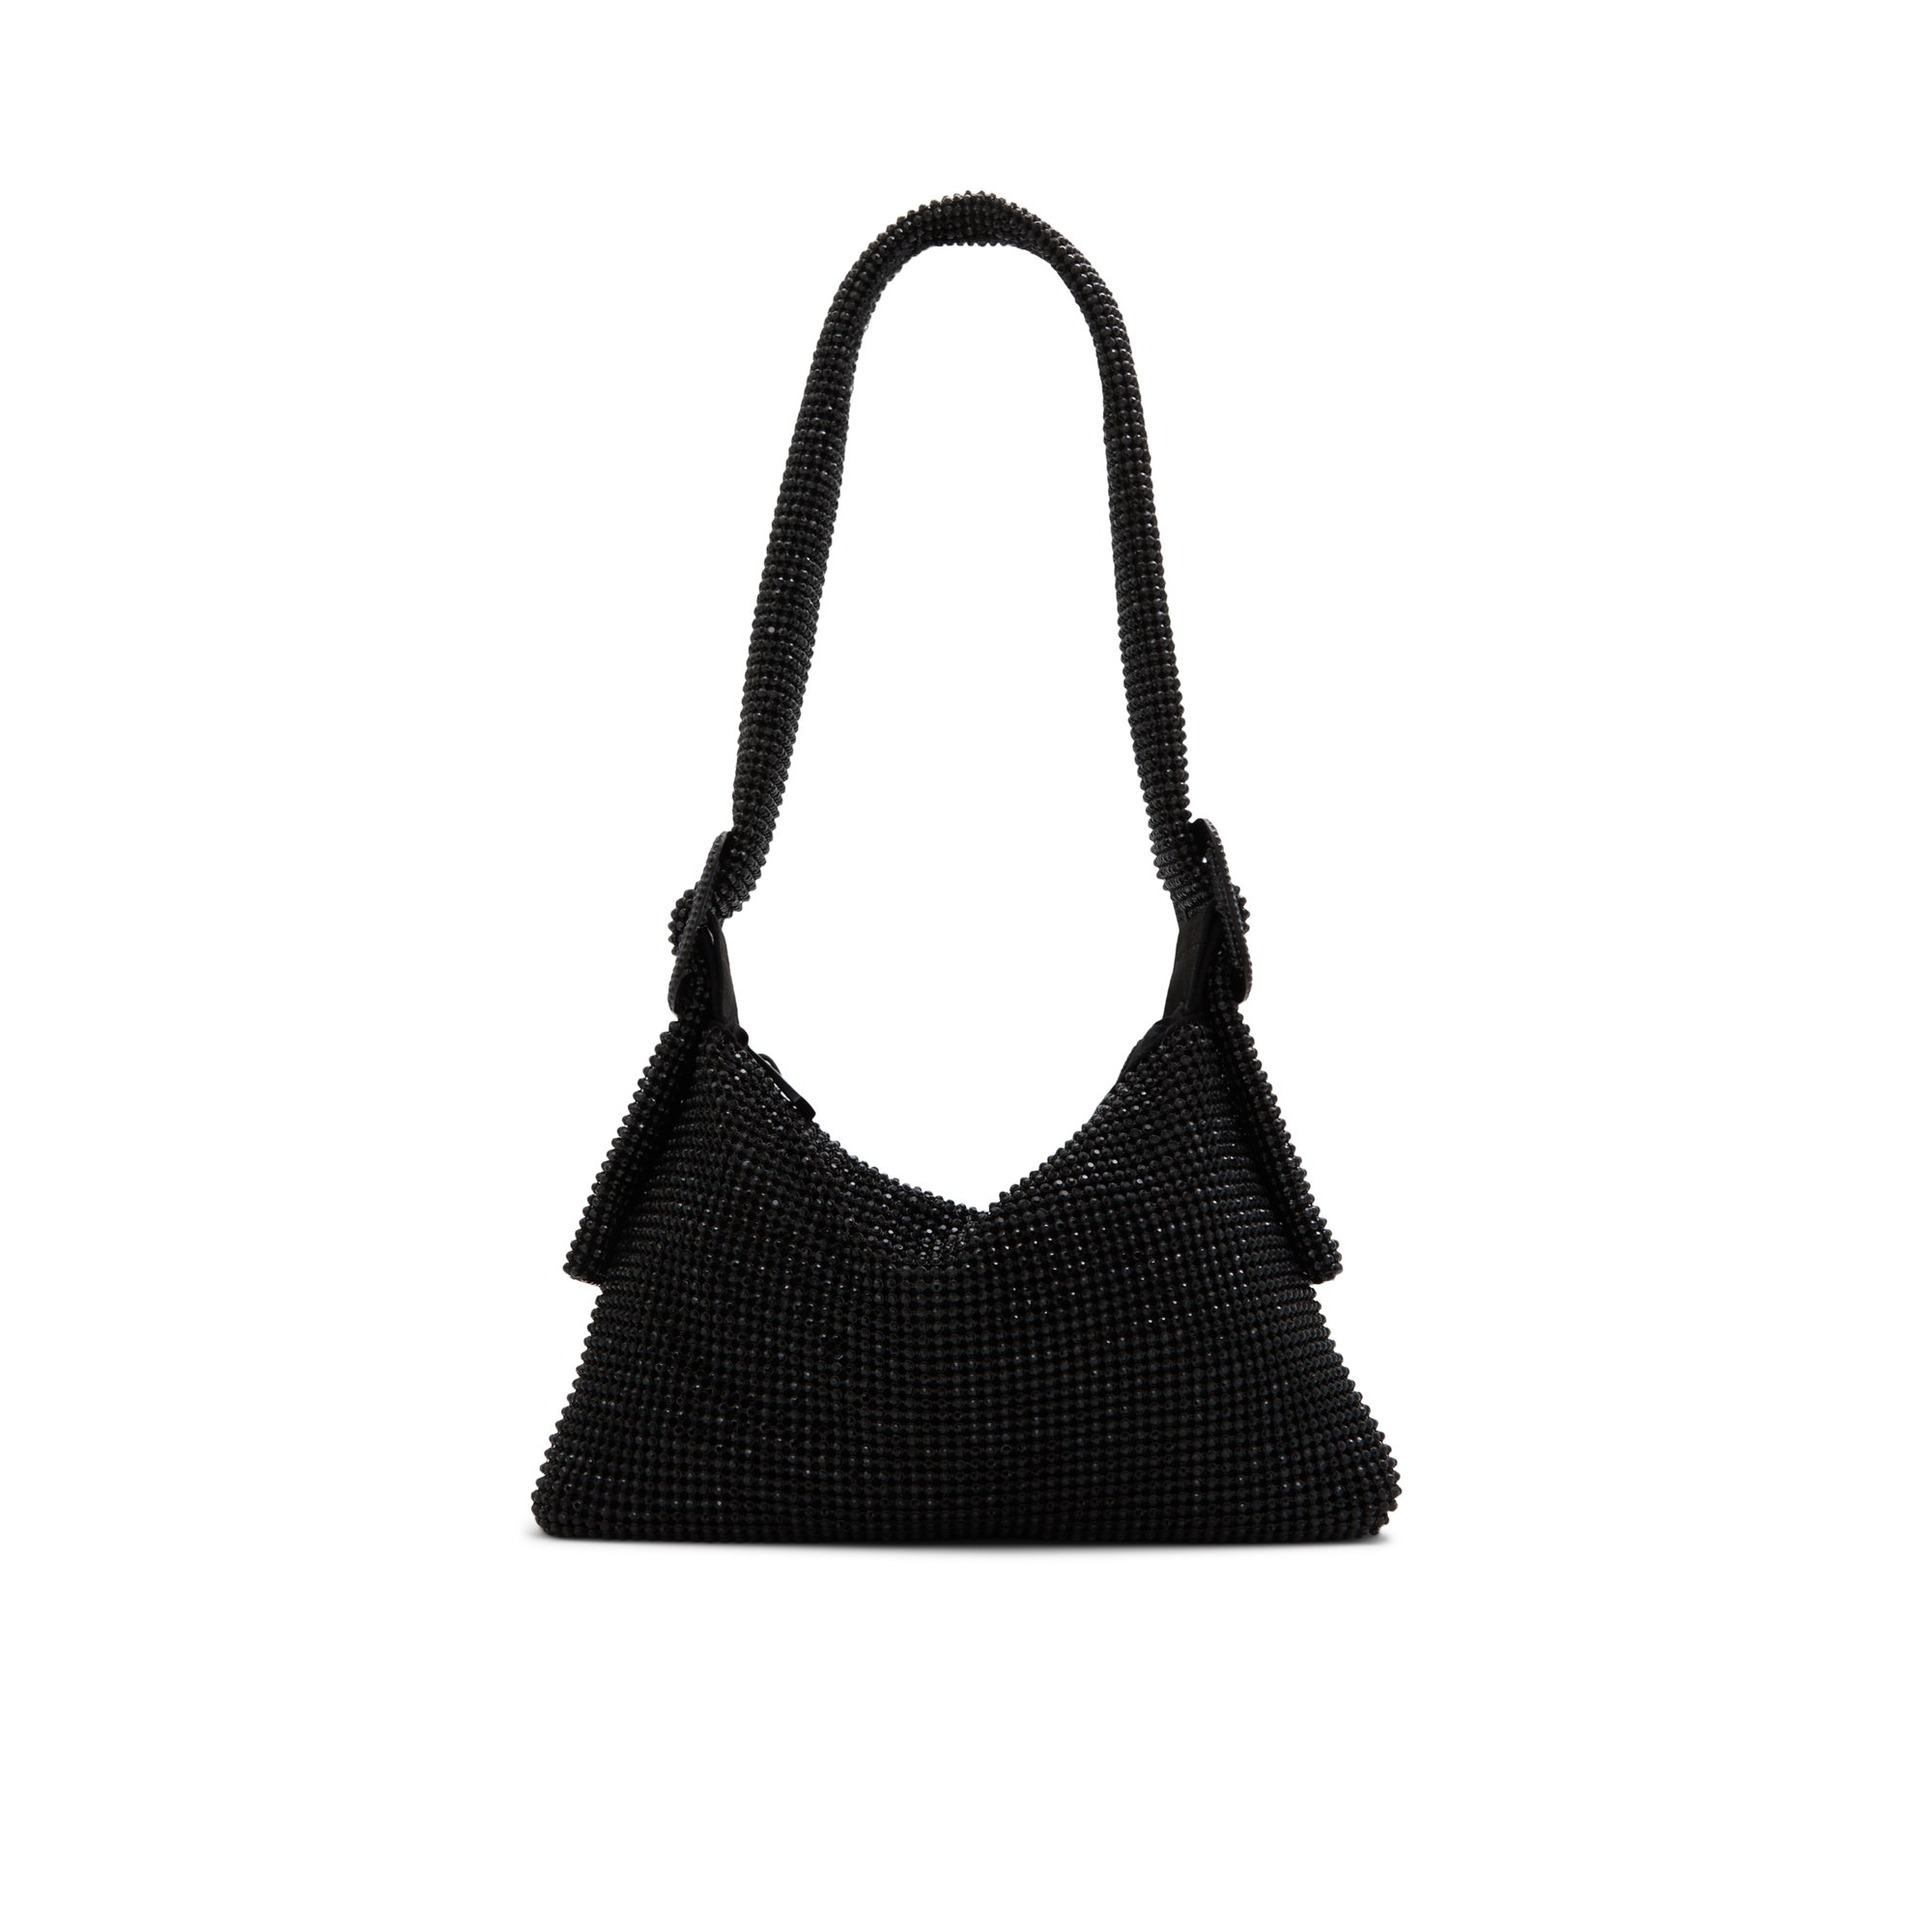 ALDO Banalia - Women's Shoulder Bag Handbag - Black